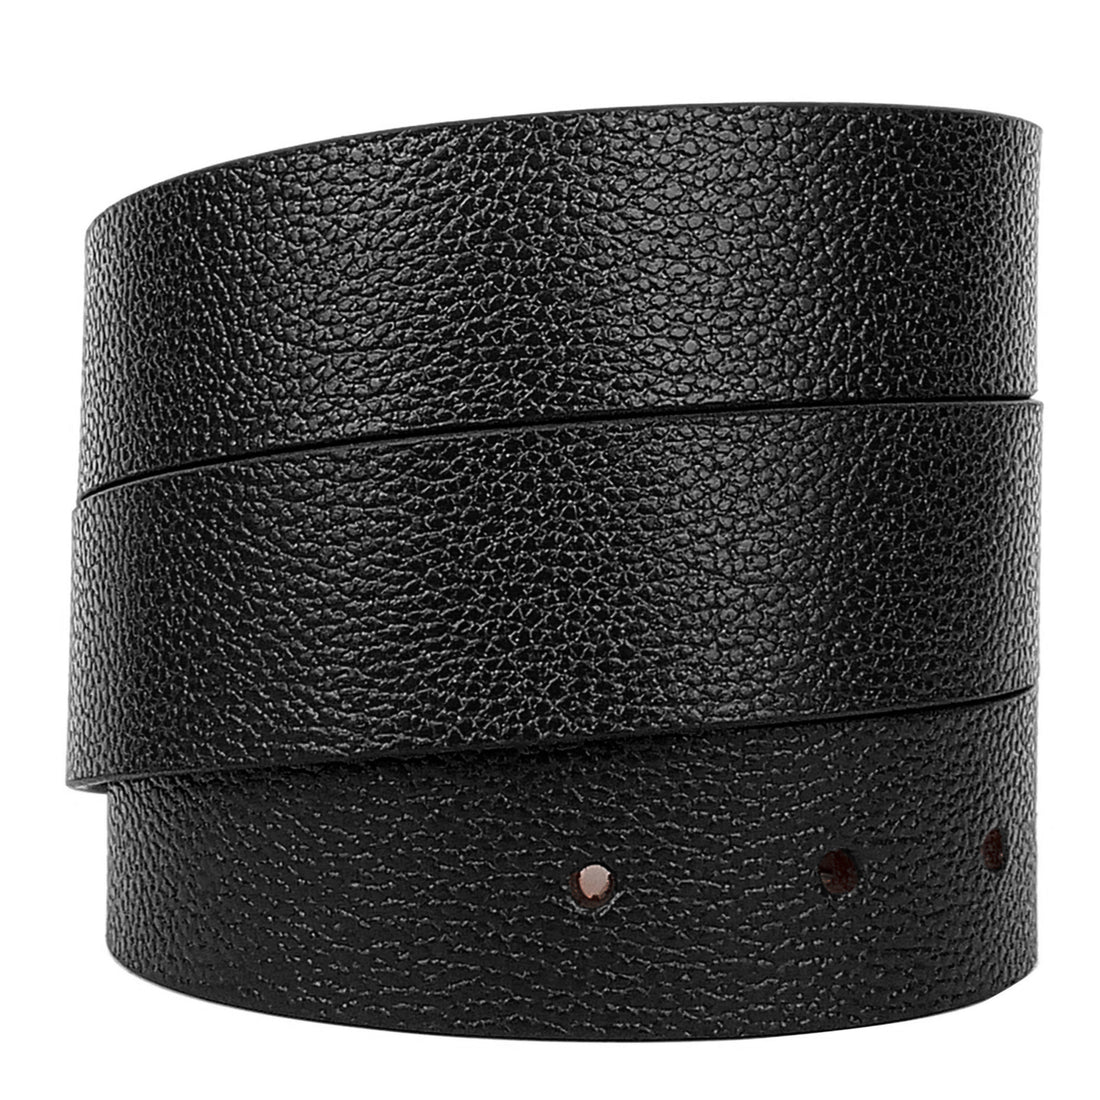 Hemener Men Pin Hole Black Genuine Leather Strap